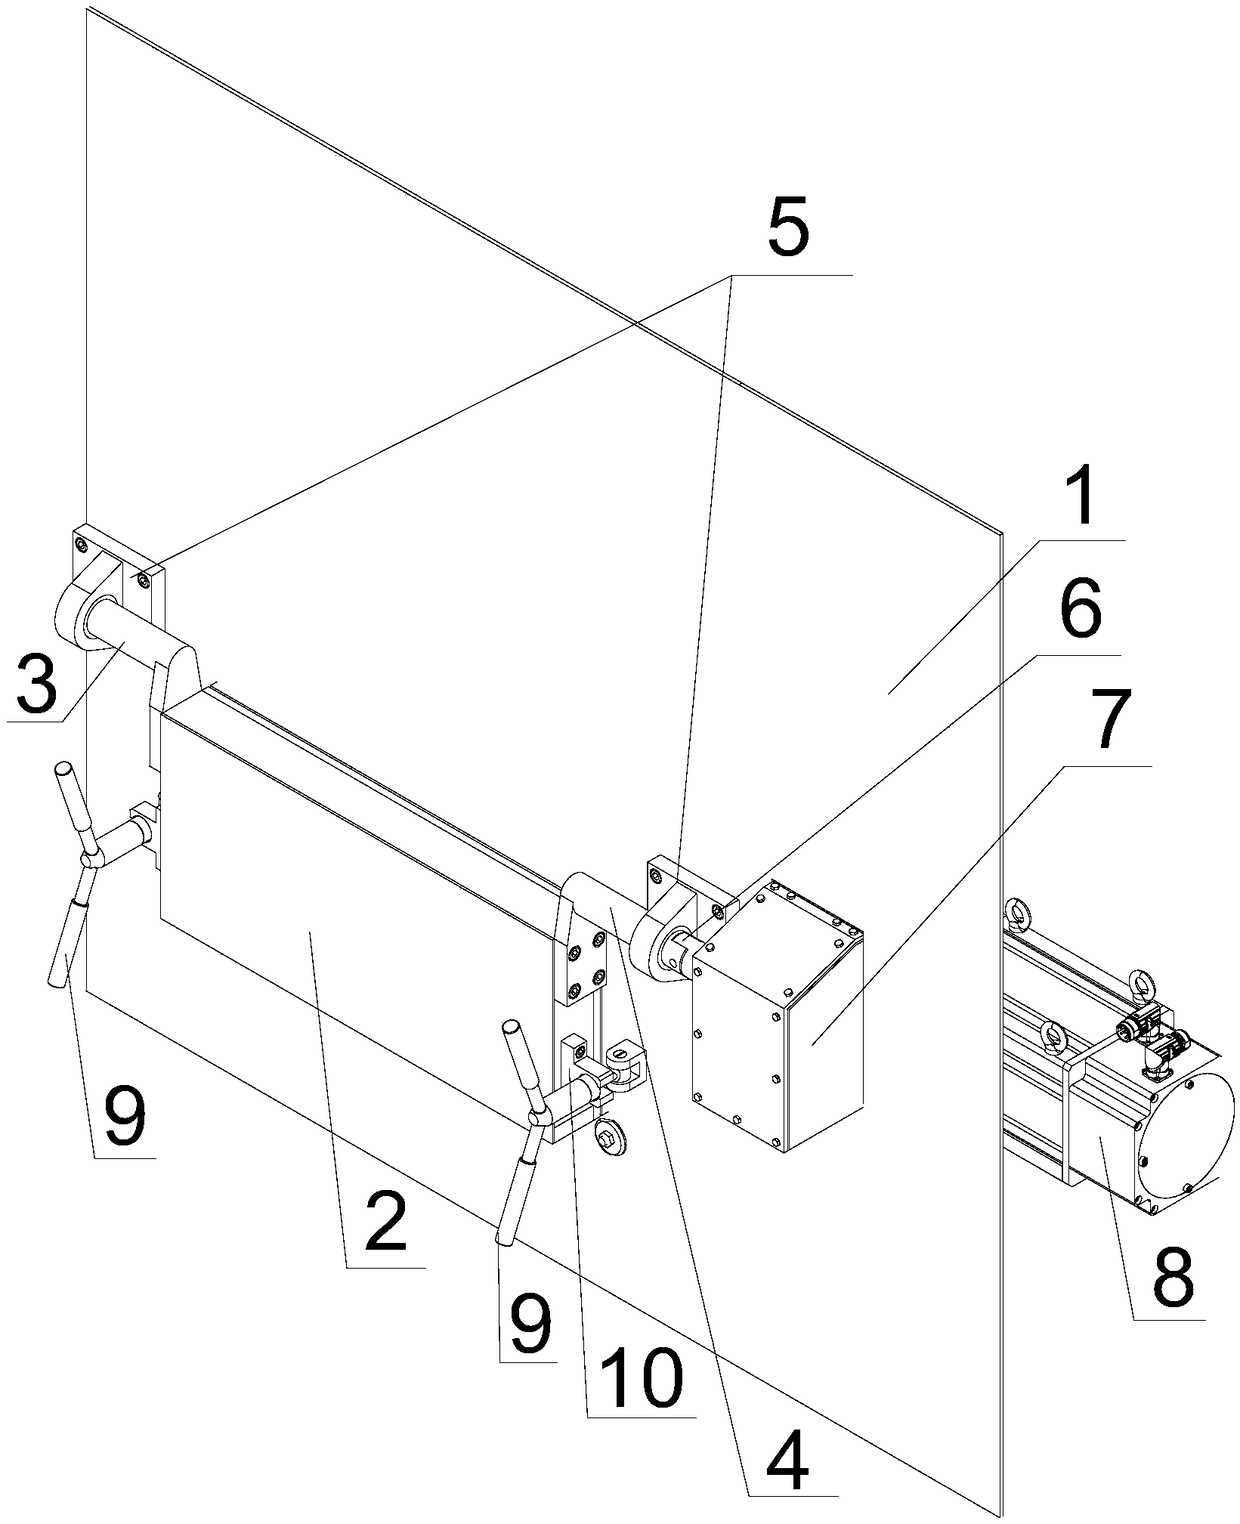 Novel small door transmission mechanism